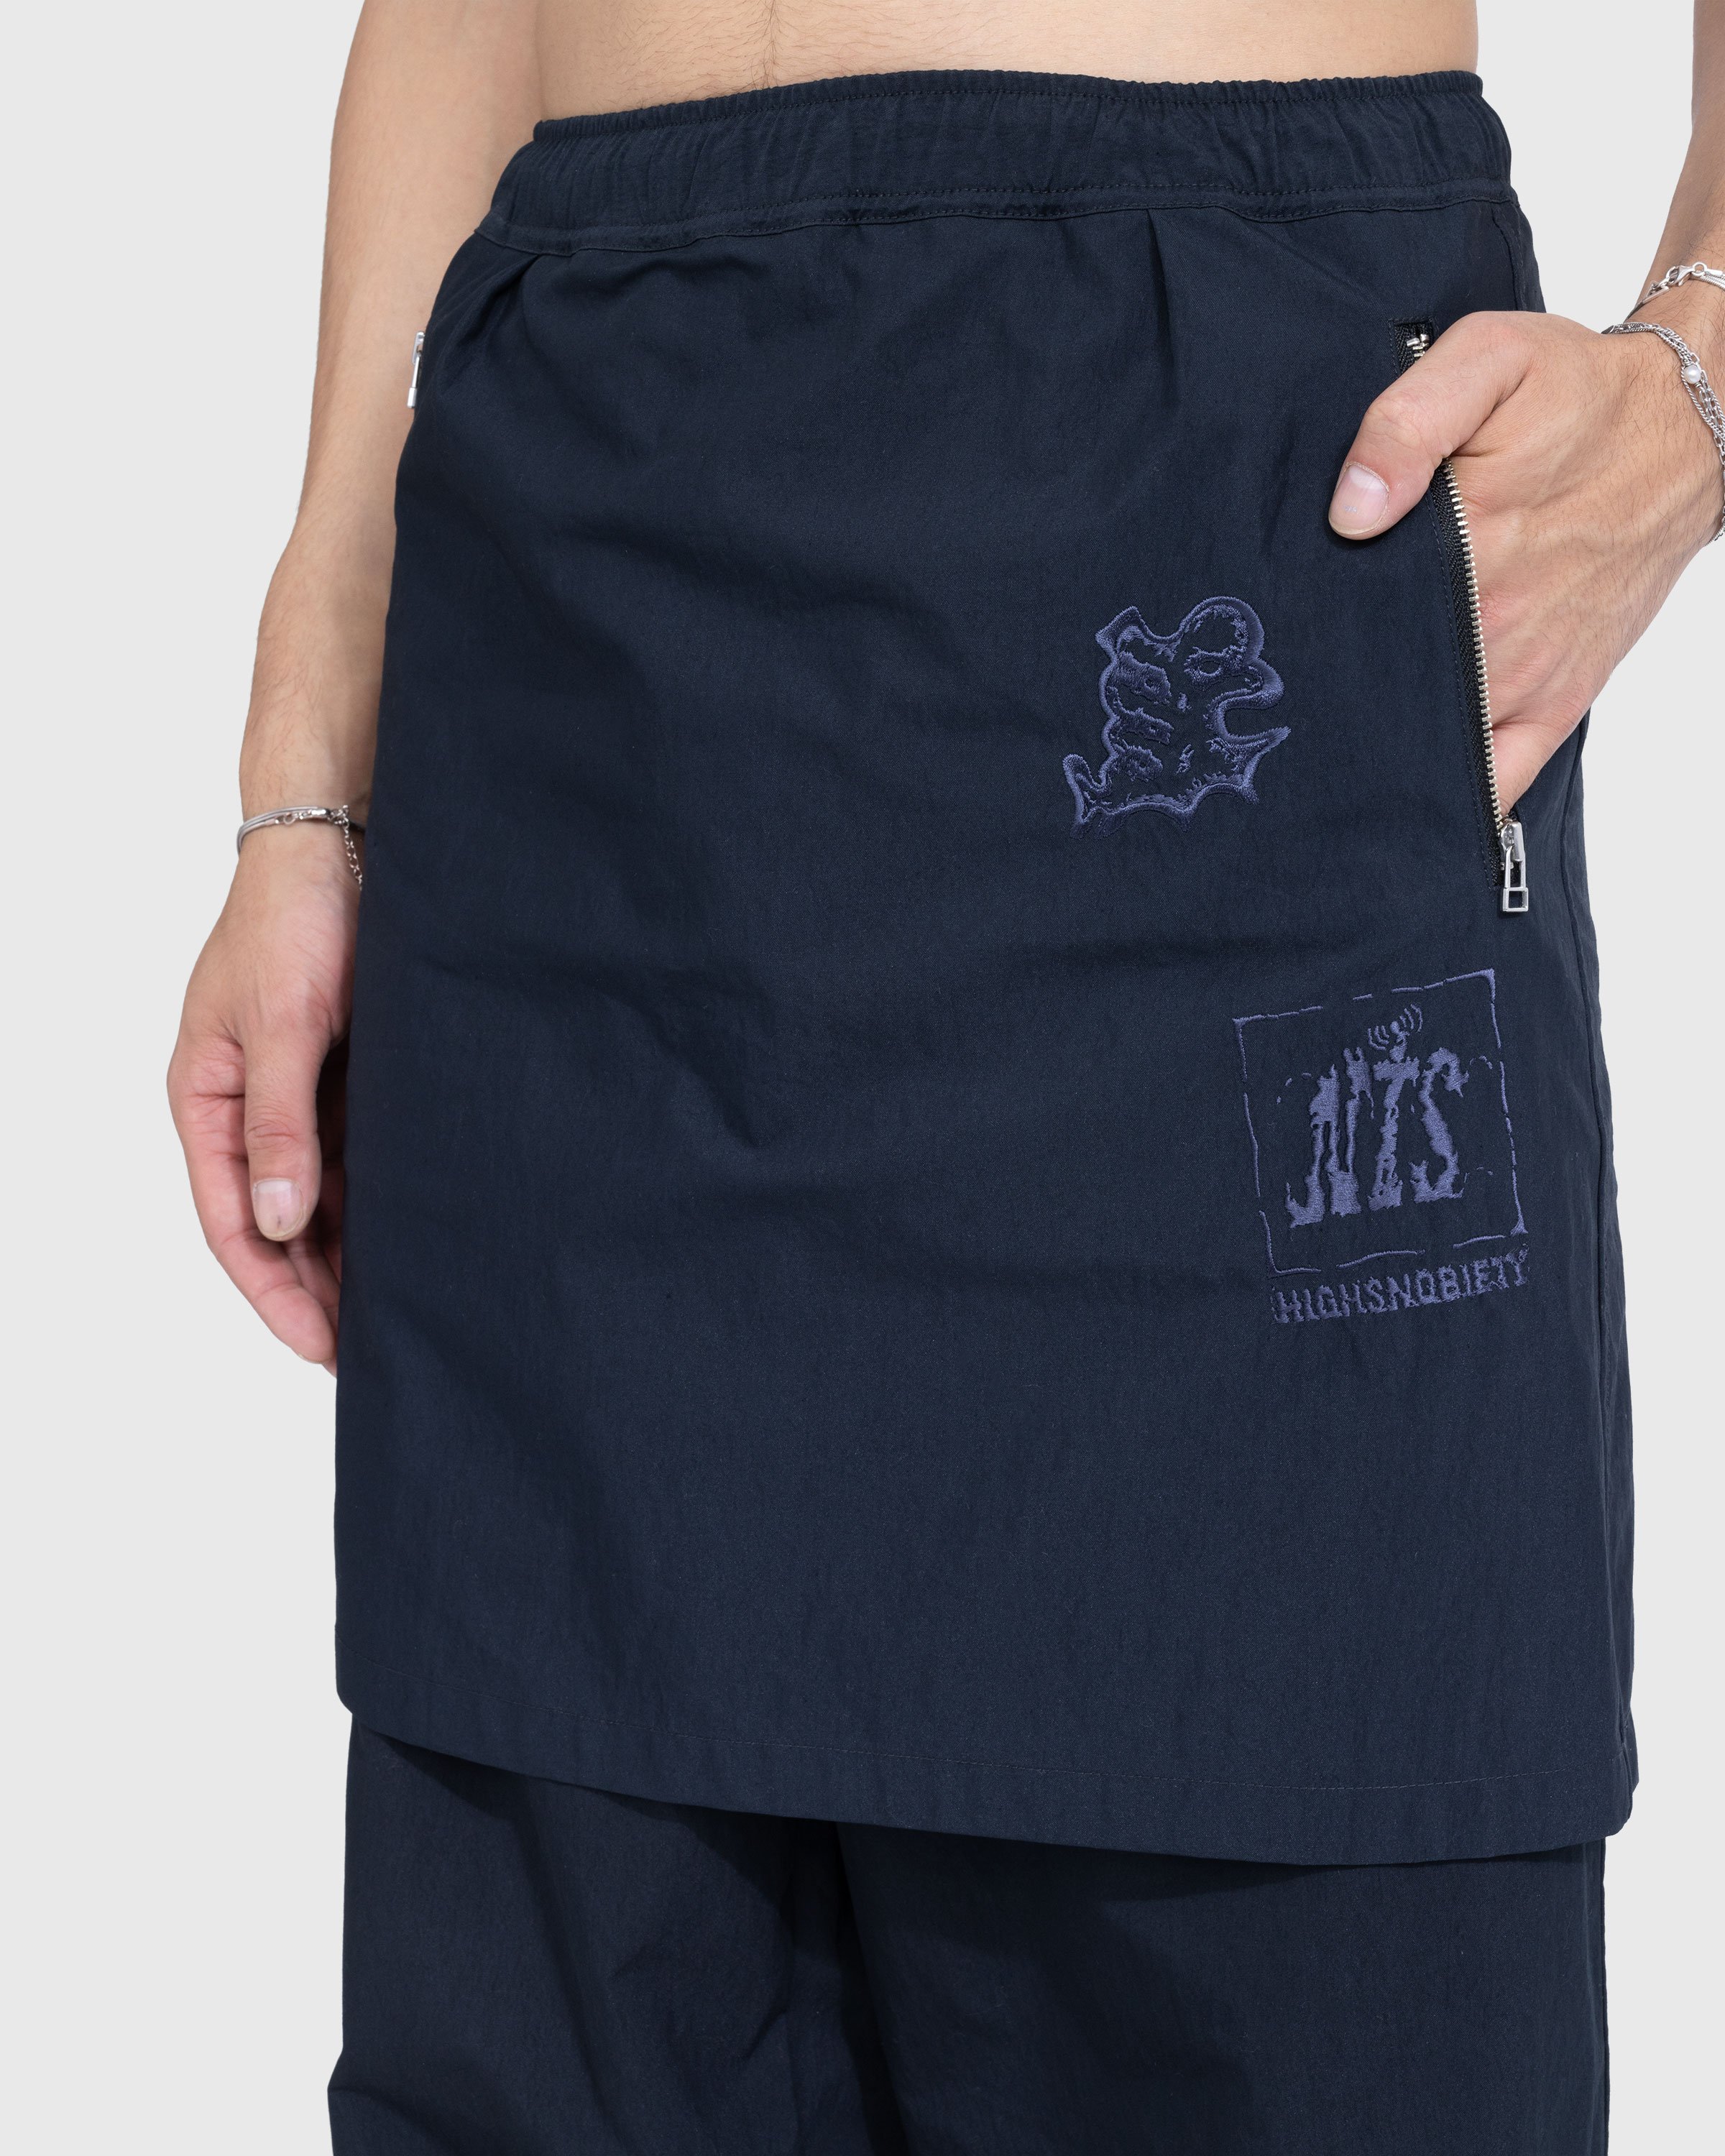 NTS x Highsnobiety - Brushed Nylon Skirt Navy - Clothing - Black - Image 6